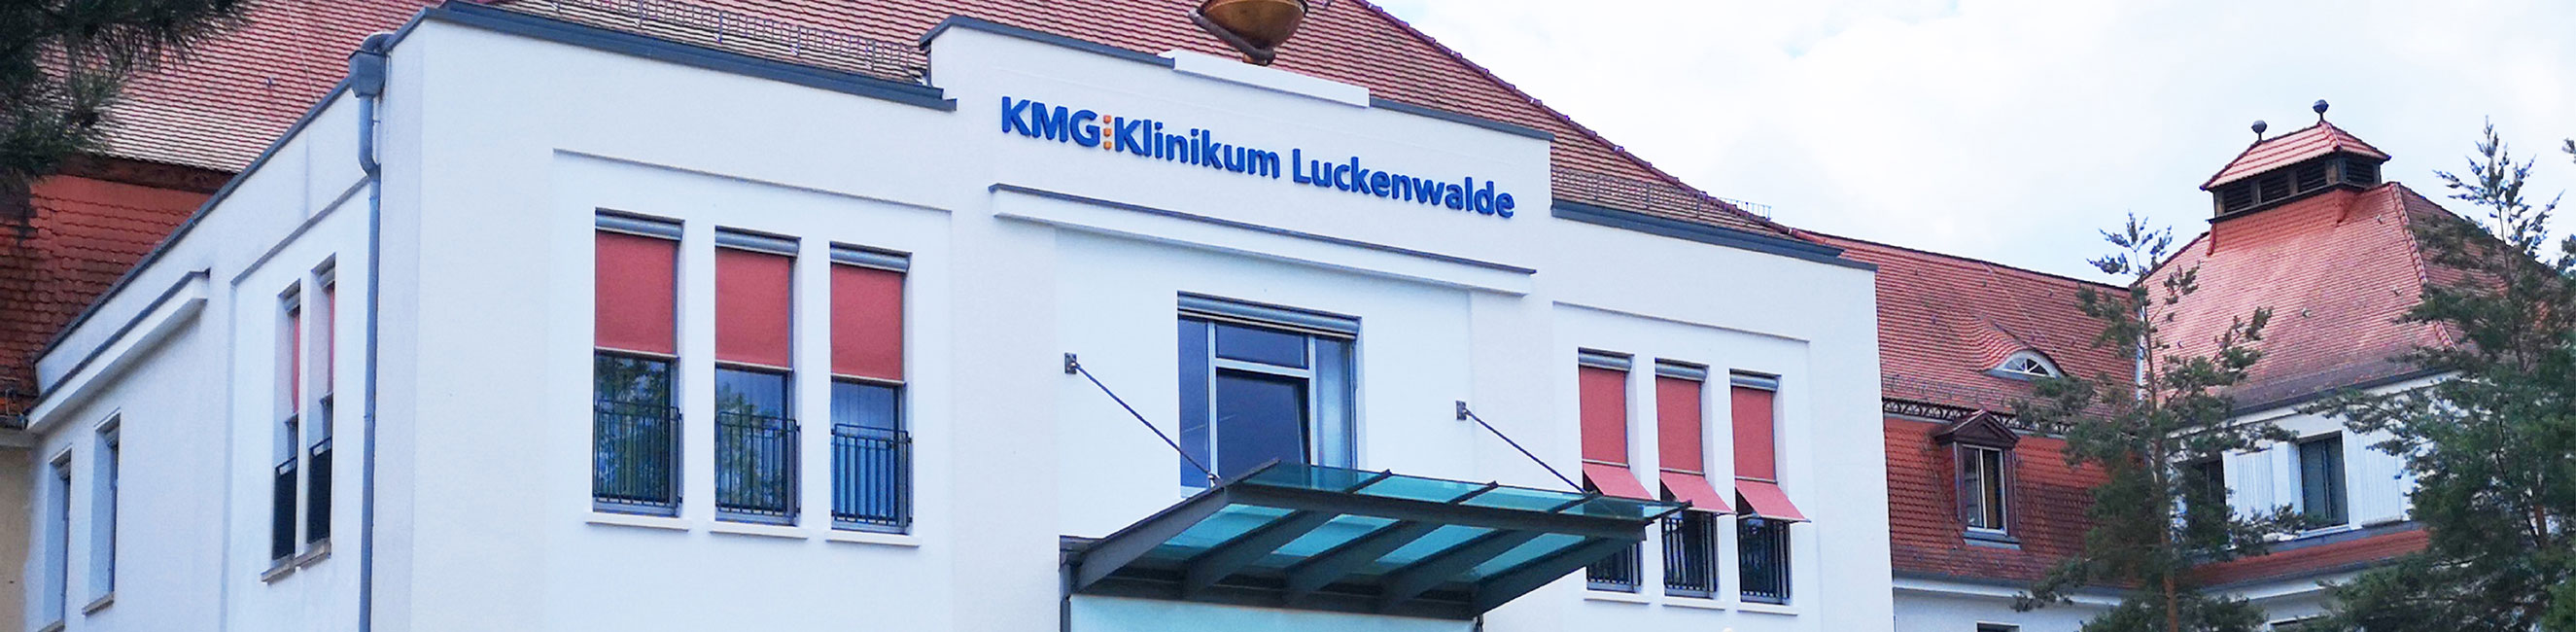 Zentrale Notaufnahme KMG Klinikum Luckenwalde